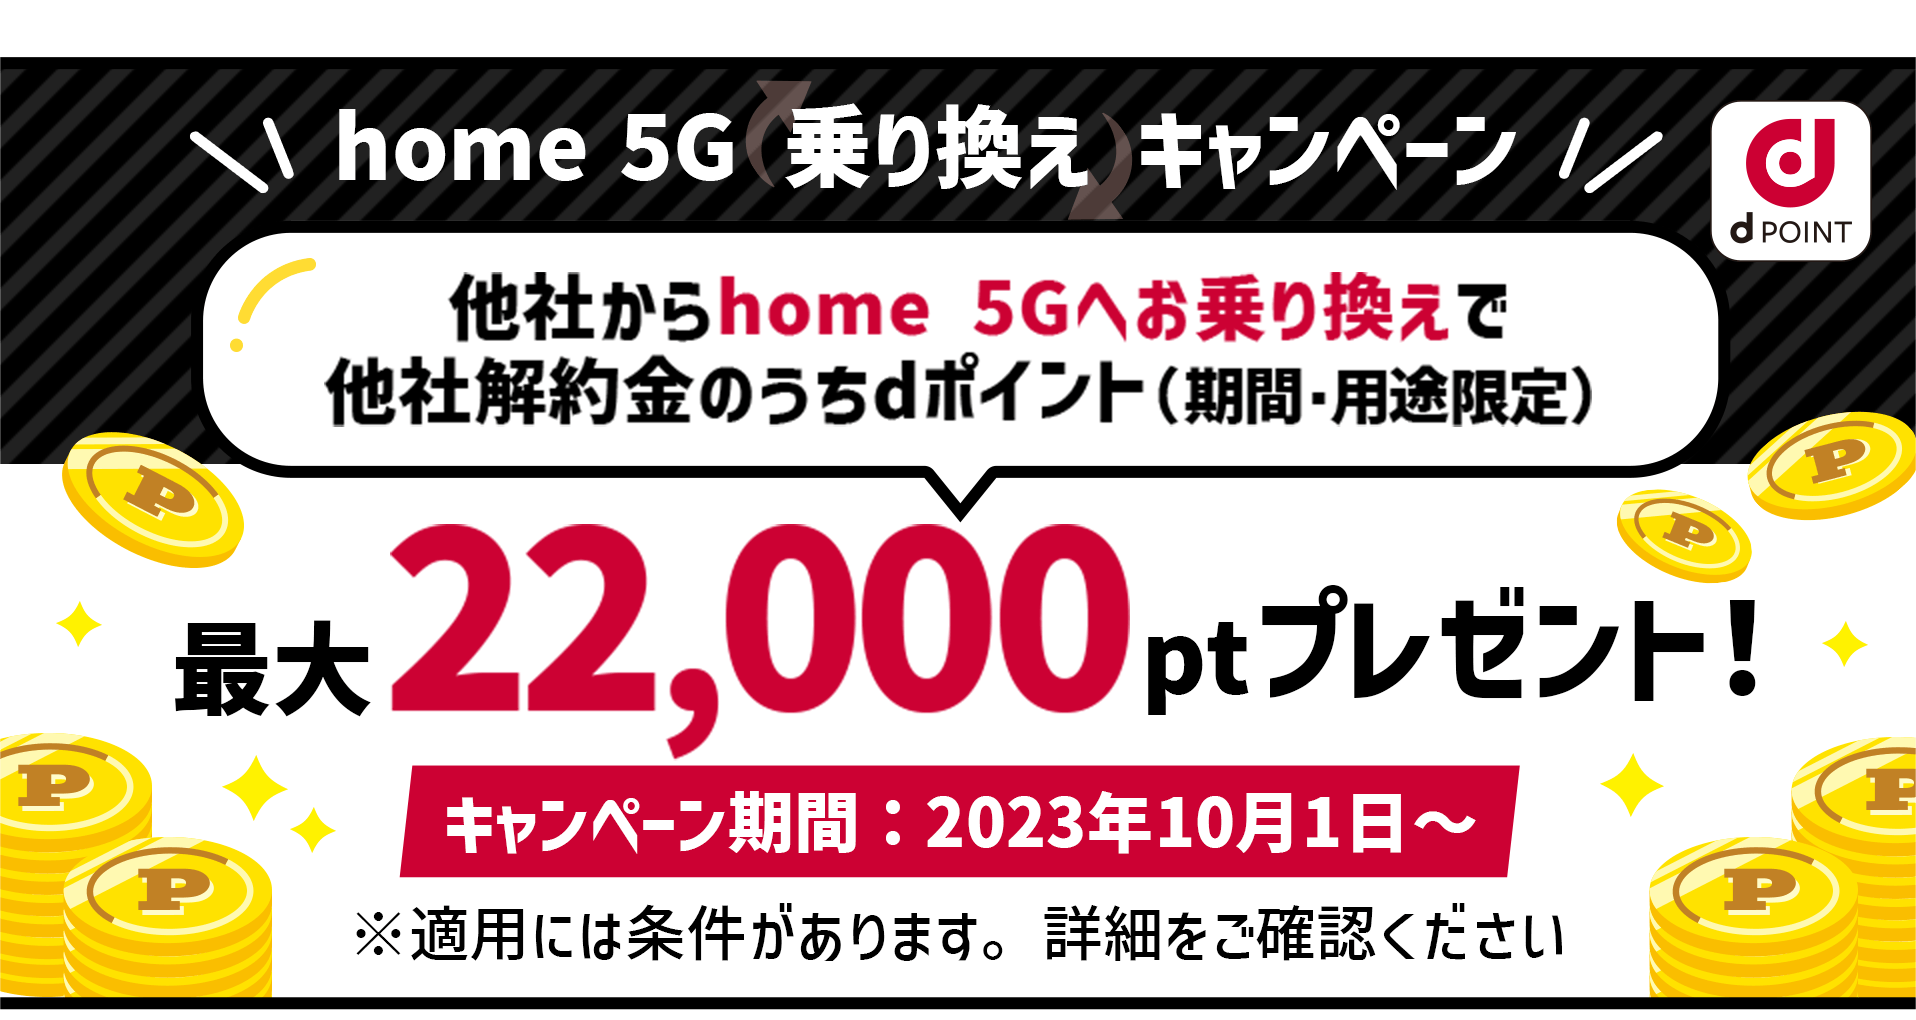 home 5G 乗り換えキャンペーン！他社からhome 5Gへお乗り換えで他社解約金のうちdポイント（期間・用途限定）最大22,000ptプレゼント！キャンペーン期間：2023年10月1日〜 ※適用には条件があります。詳細をご確認ください